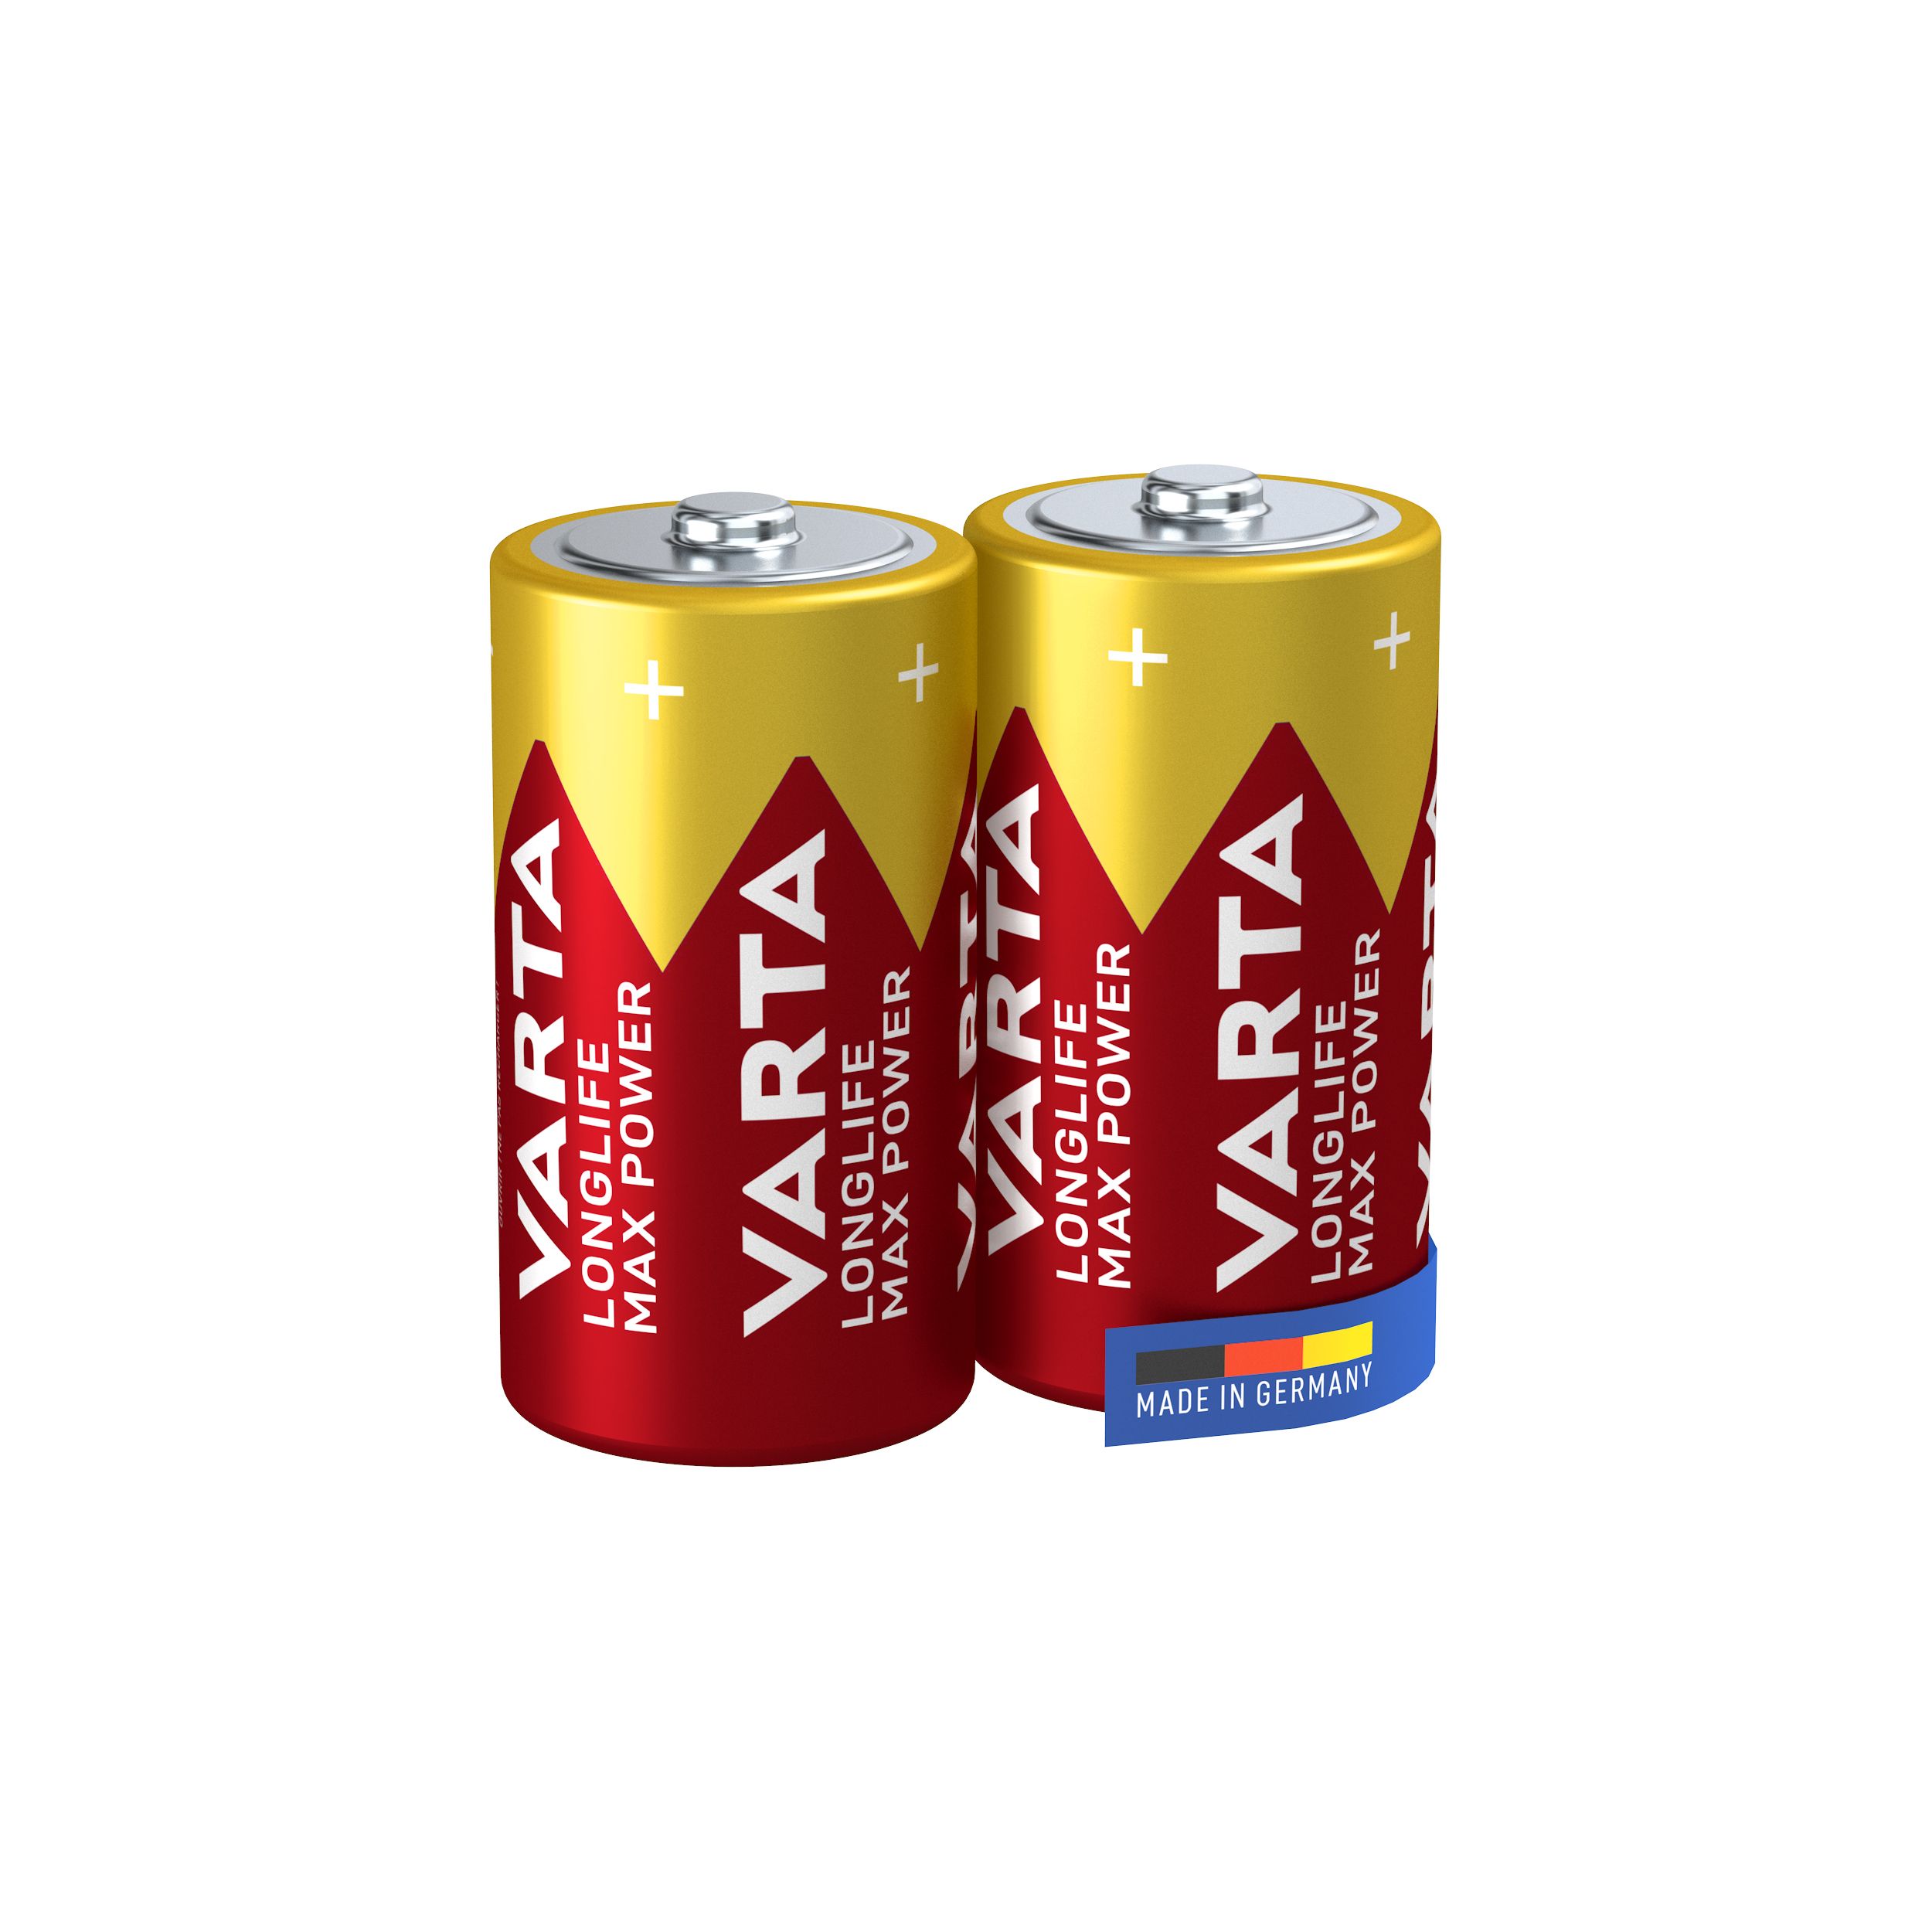 Varta Longlife Max Power 1.5V C Batteries, Pack of 2